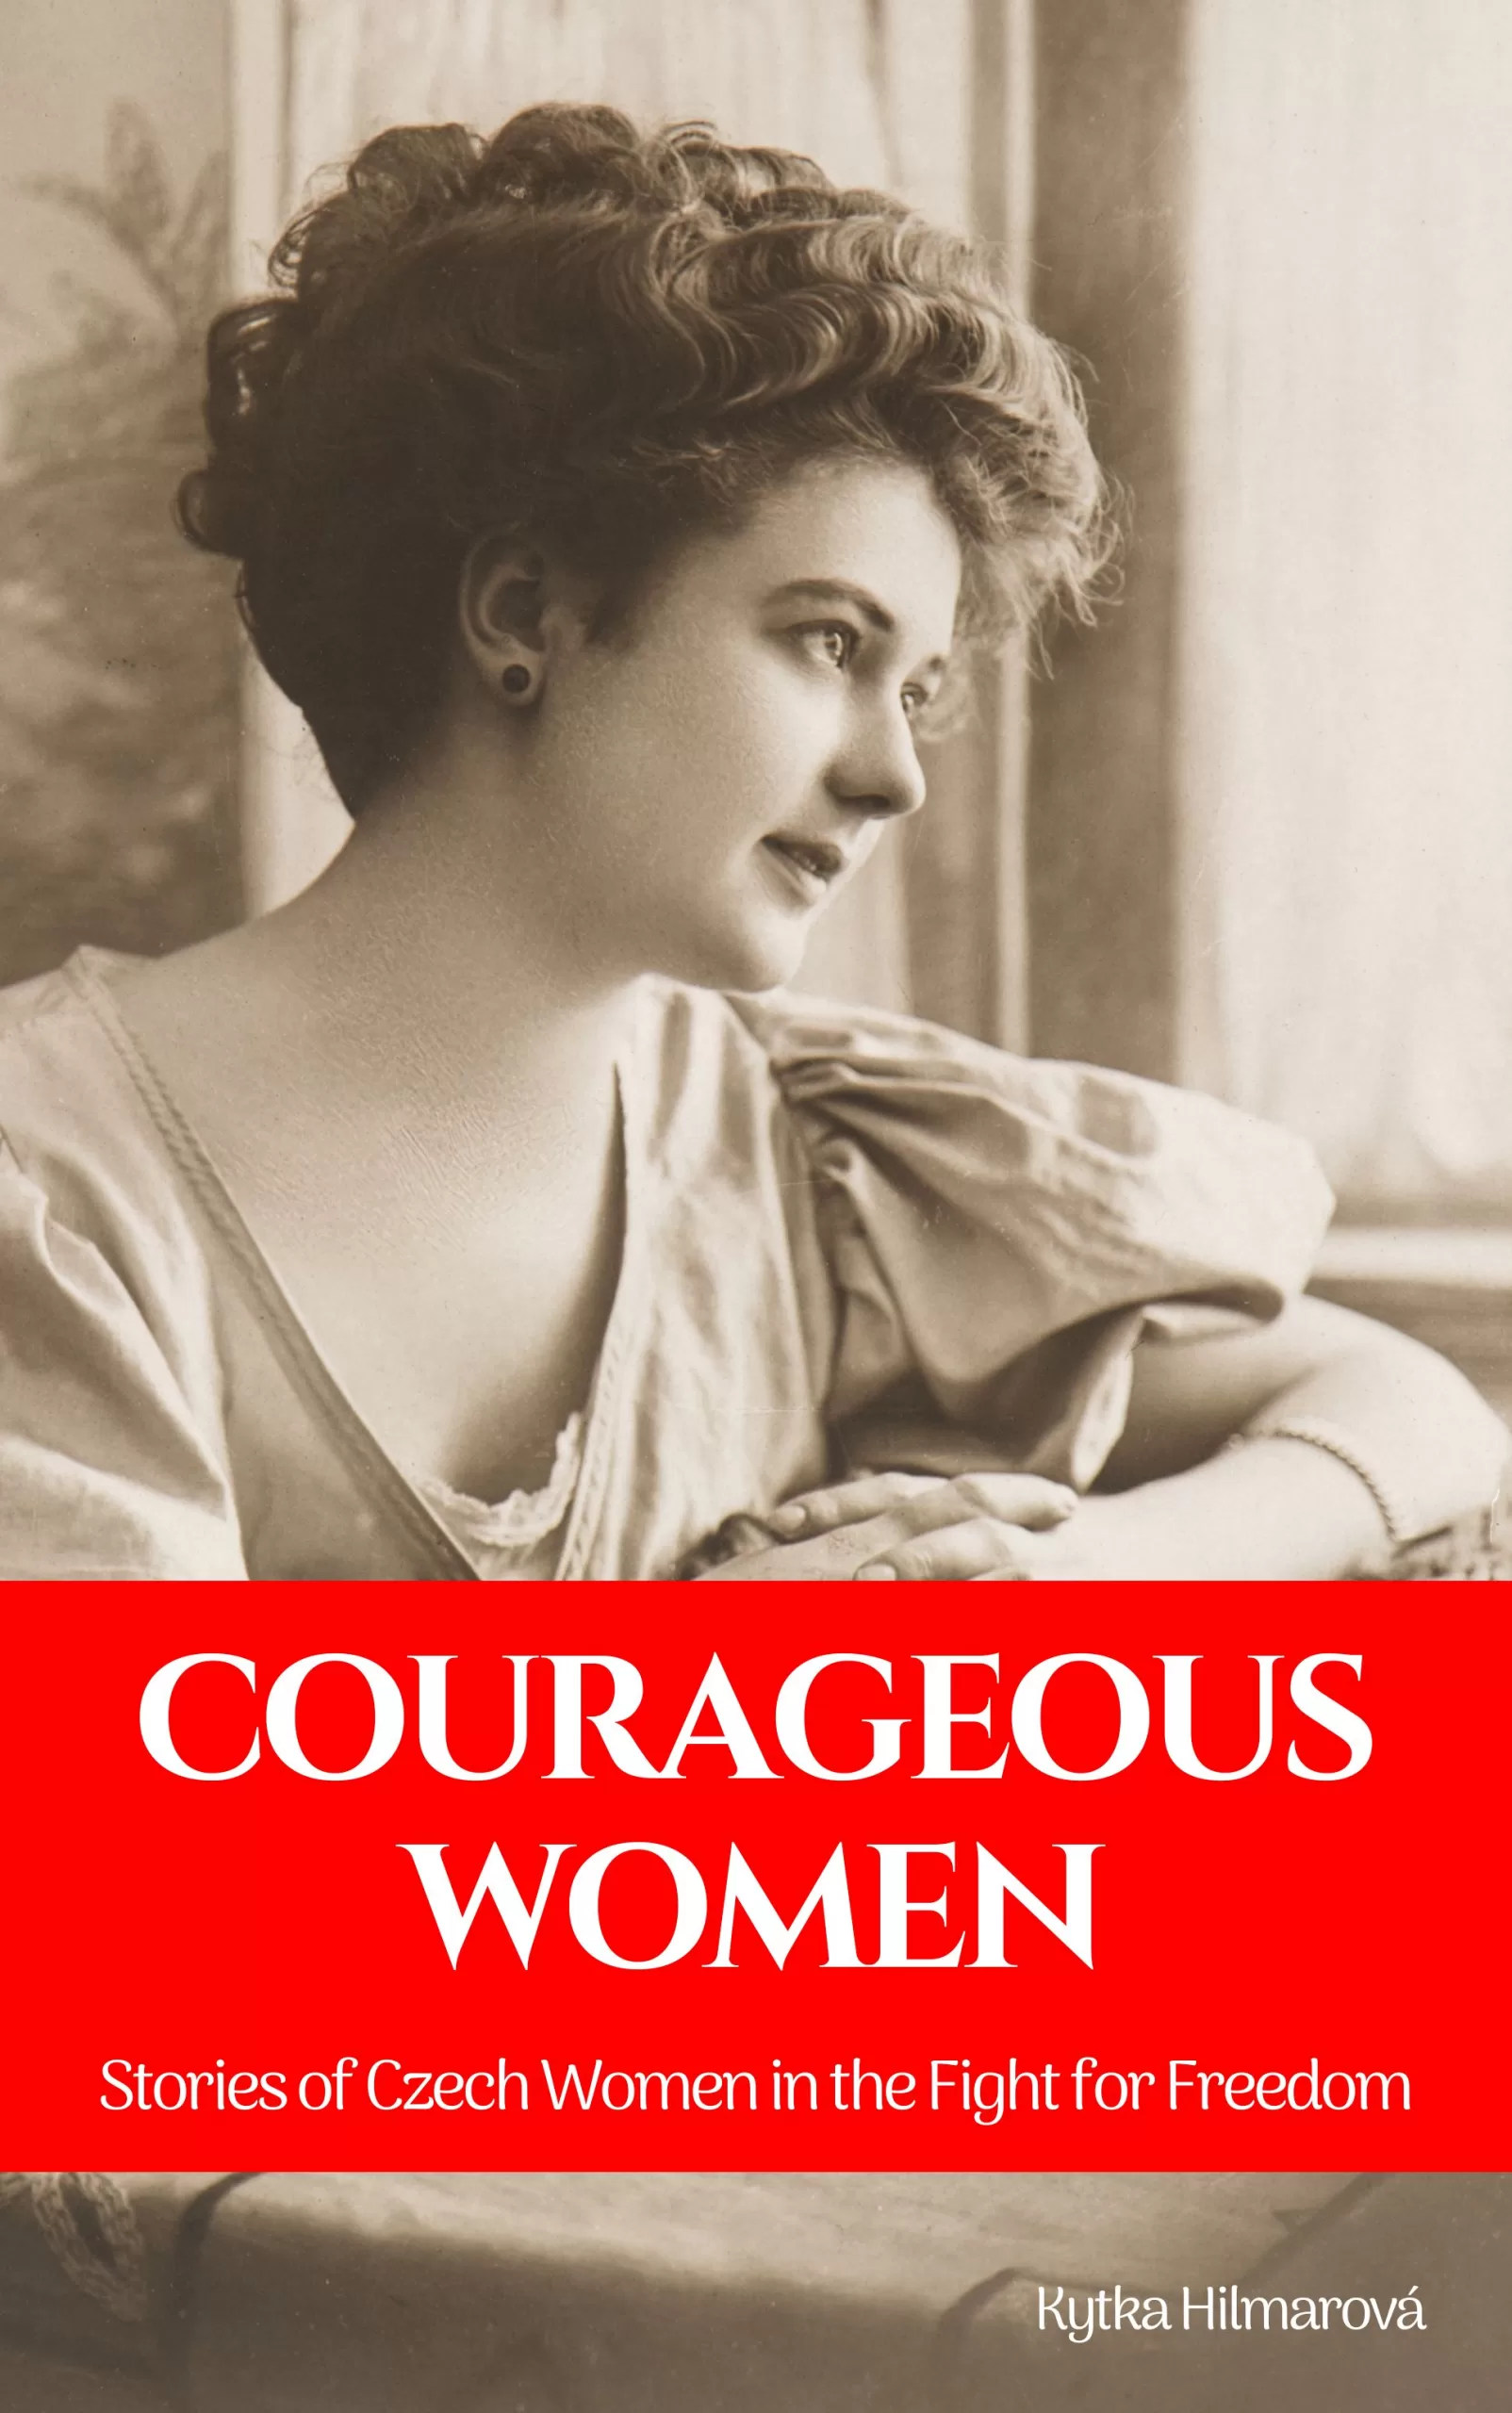 Courageous Women: Stories of Czech Women in the Fight for Freedom by Kytka Hilmarova